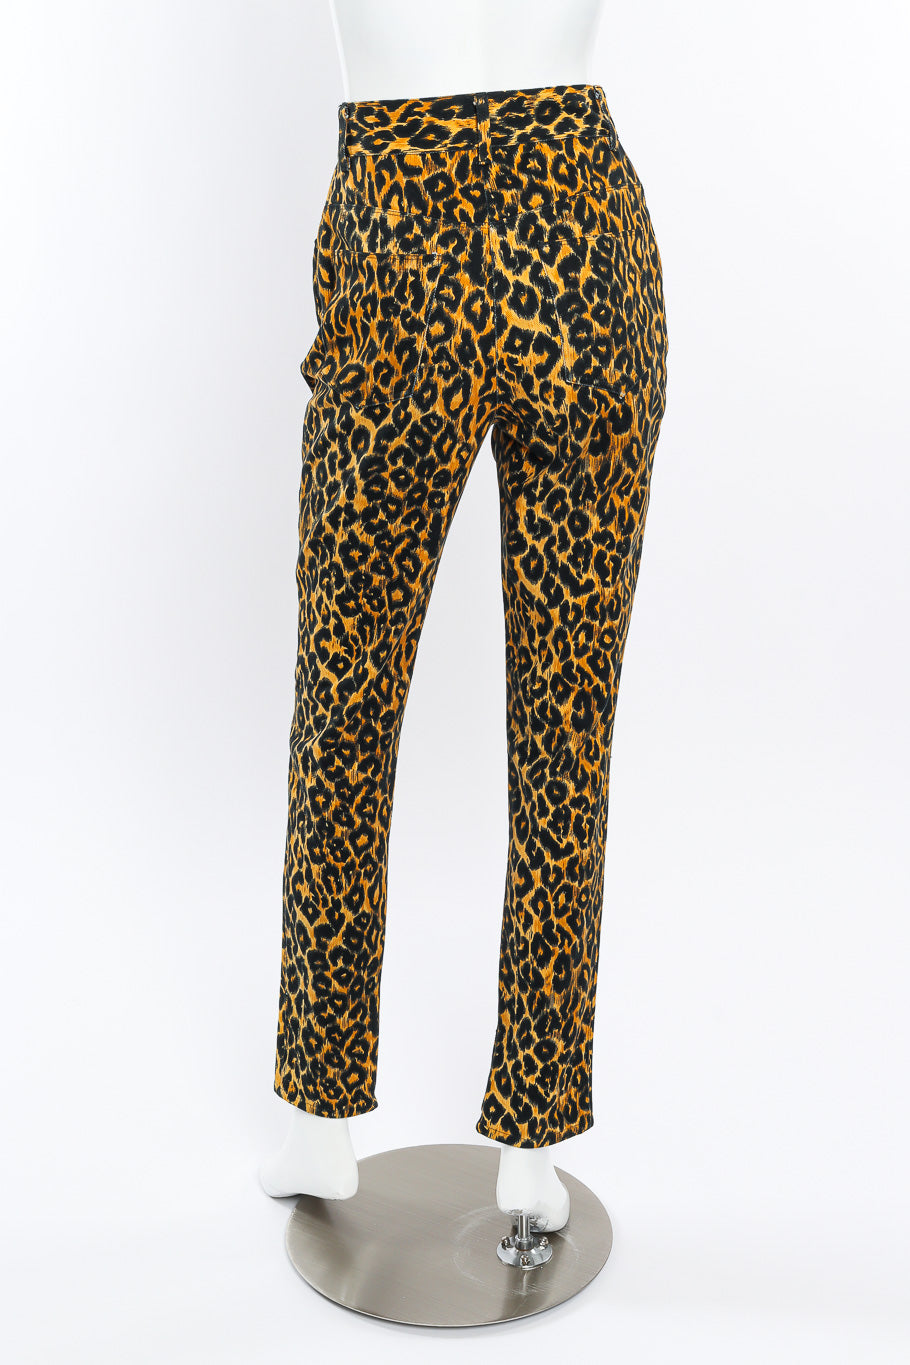 Versus Versace Leopard Print Denim Pant back view on mannequin @Recessla